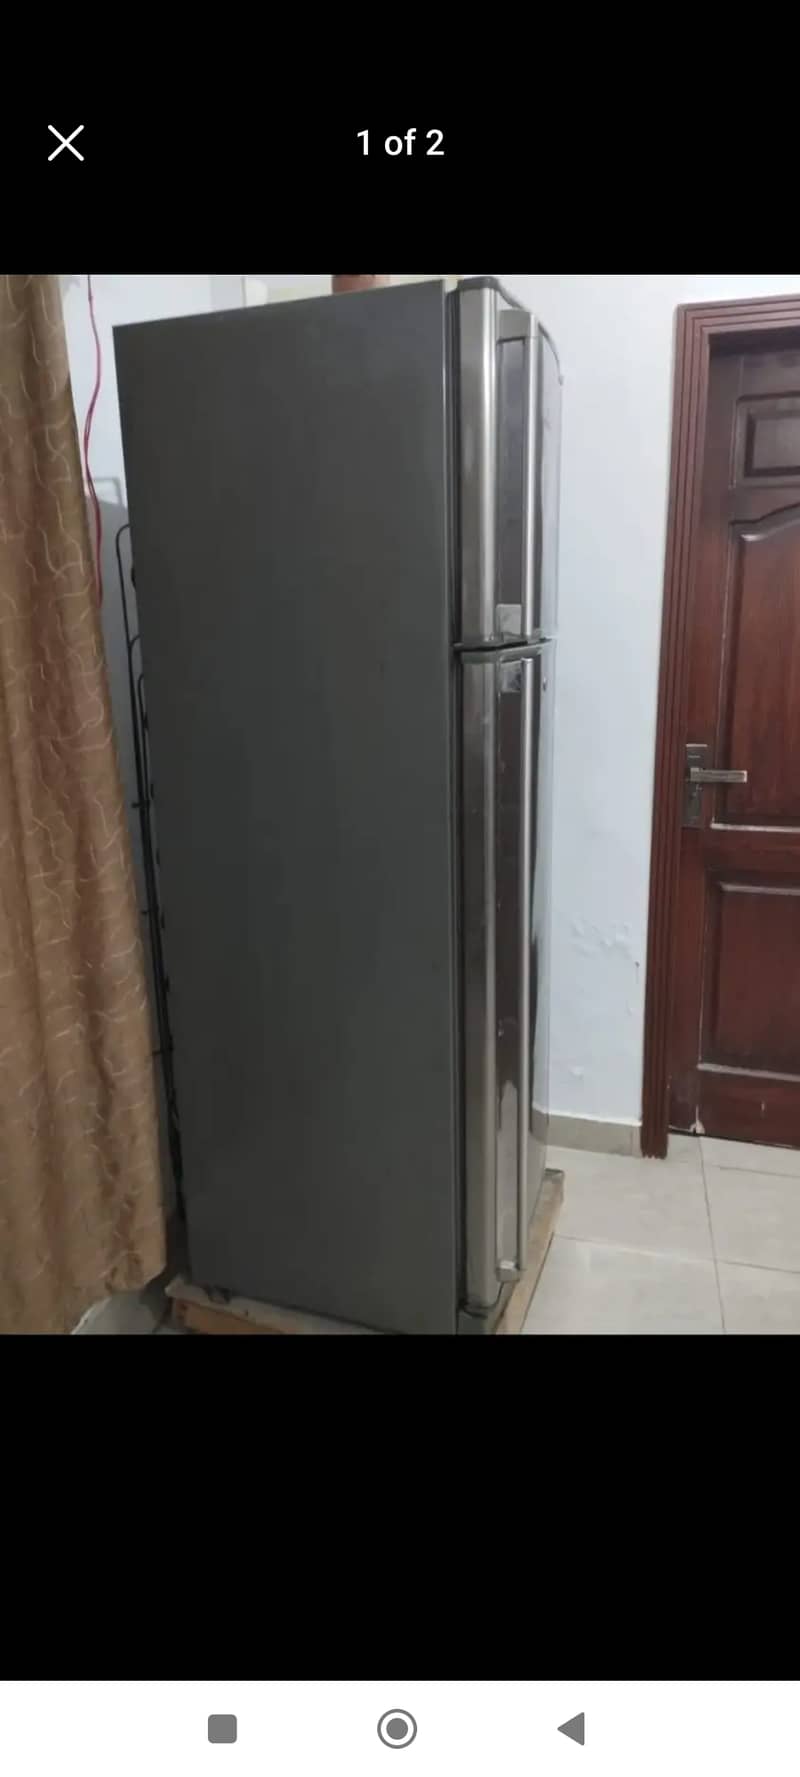 Dawalance refrigerator for sale 1